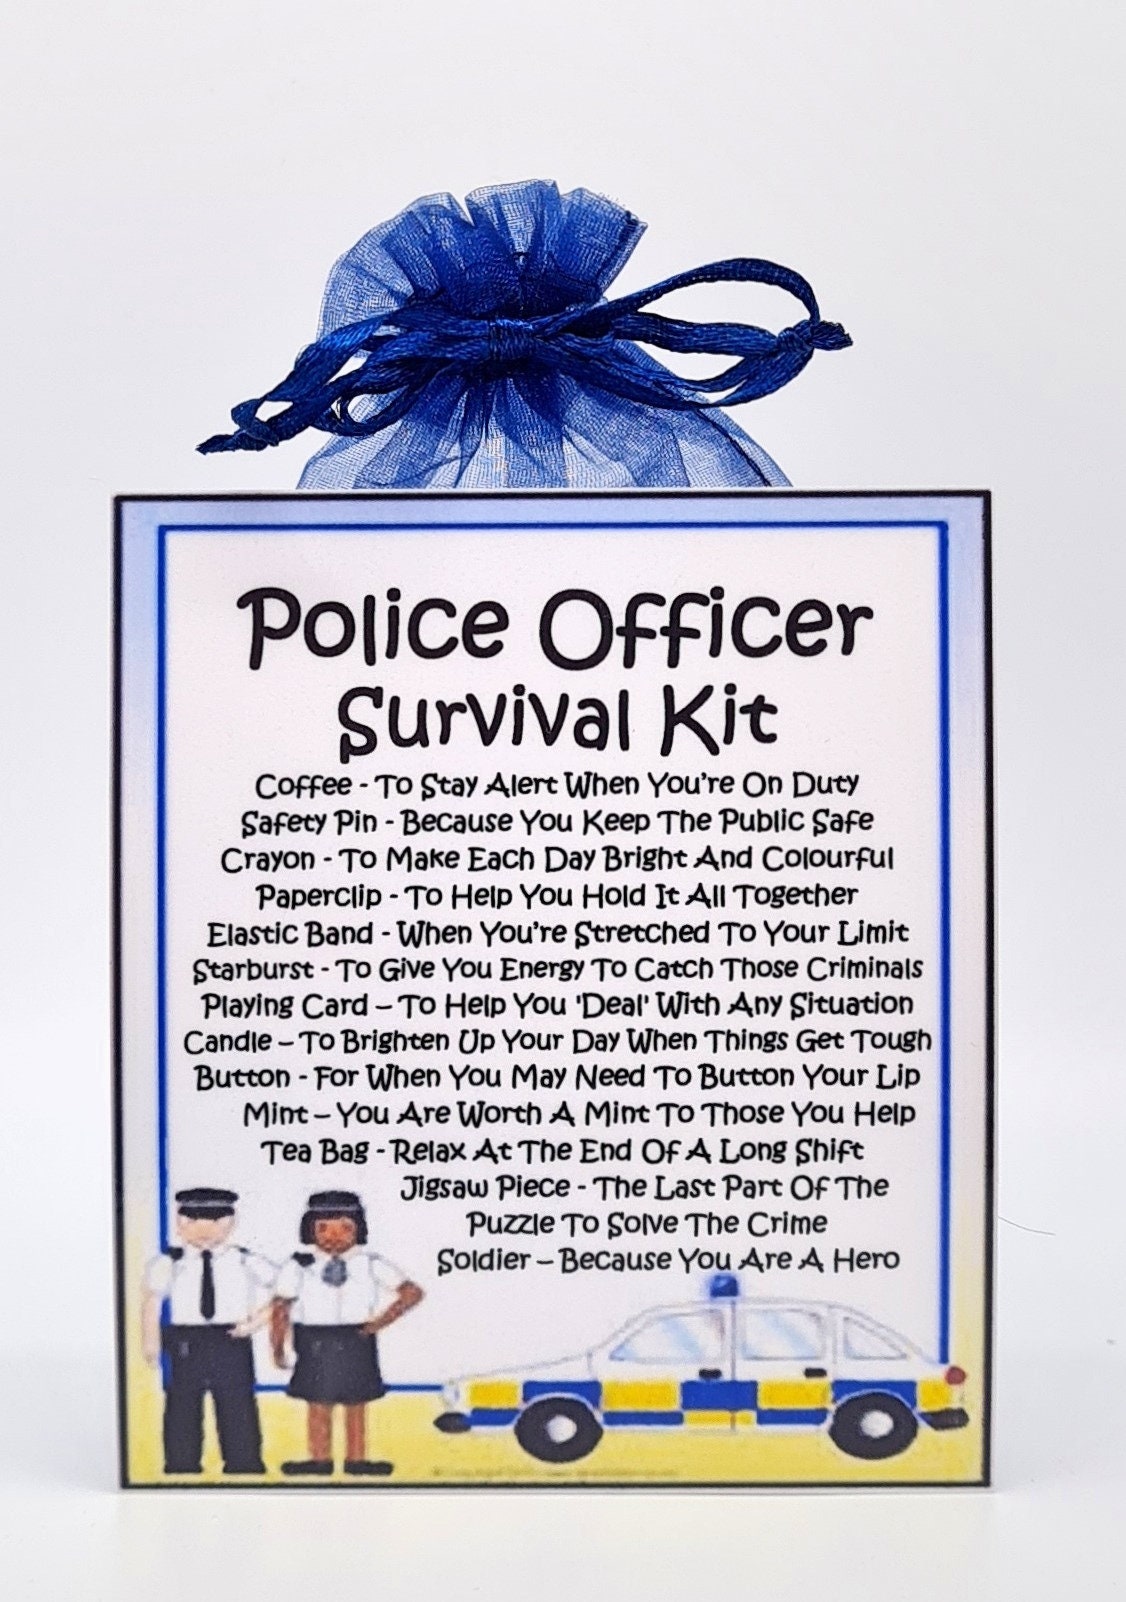 5. Policer Officer Survival Kit Card